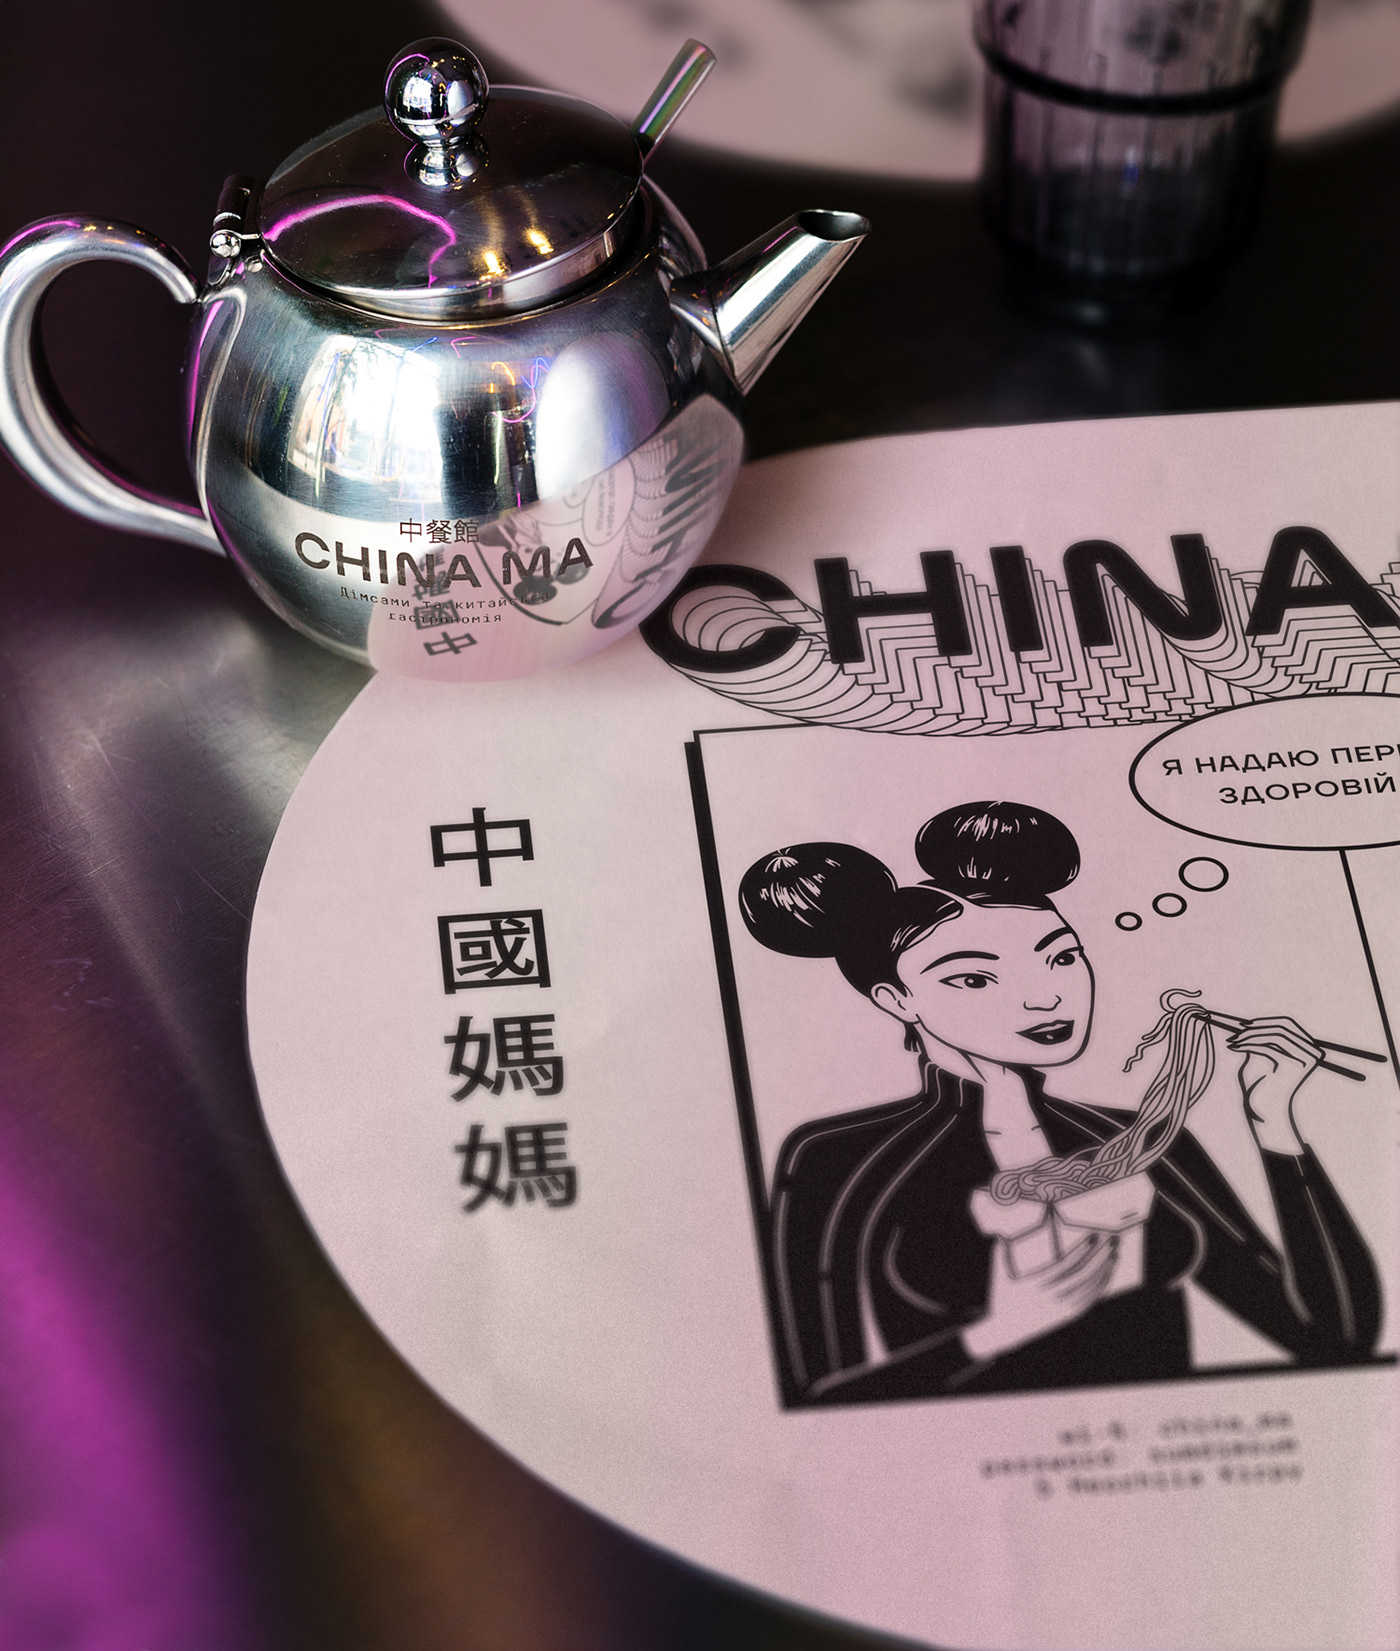 ejemplos-identidad-corporativa-restaurante-china-ma-54